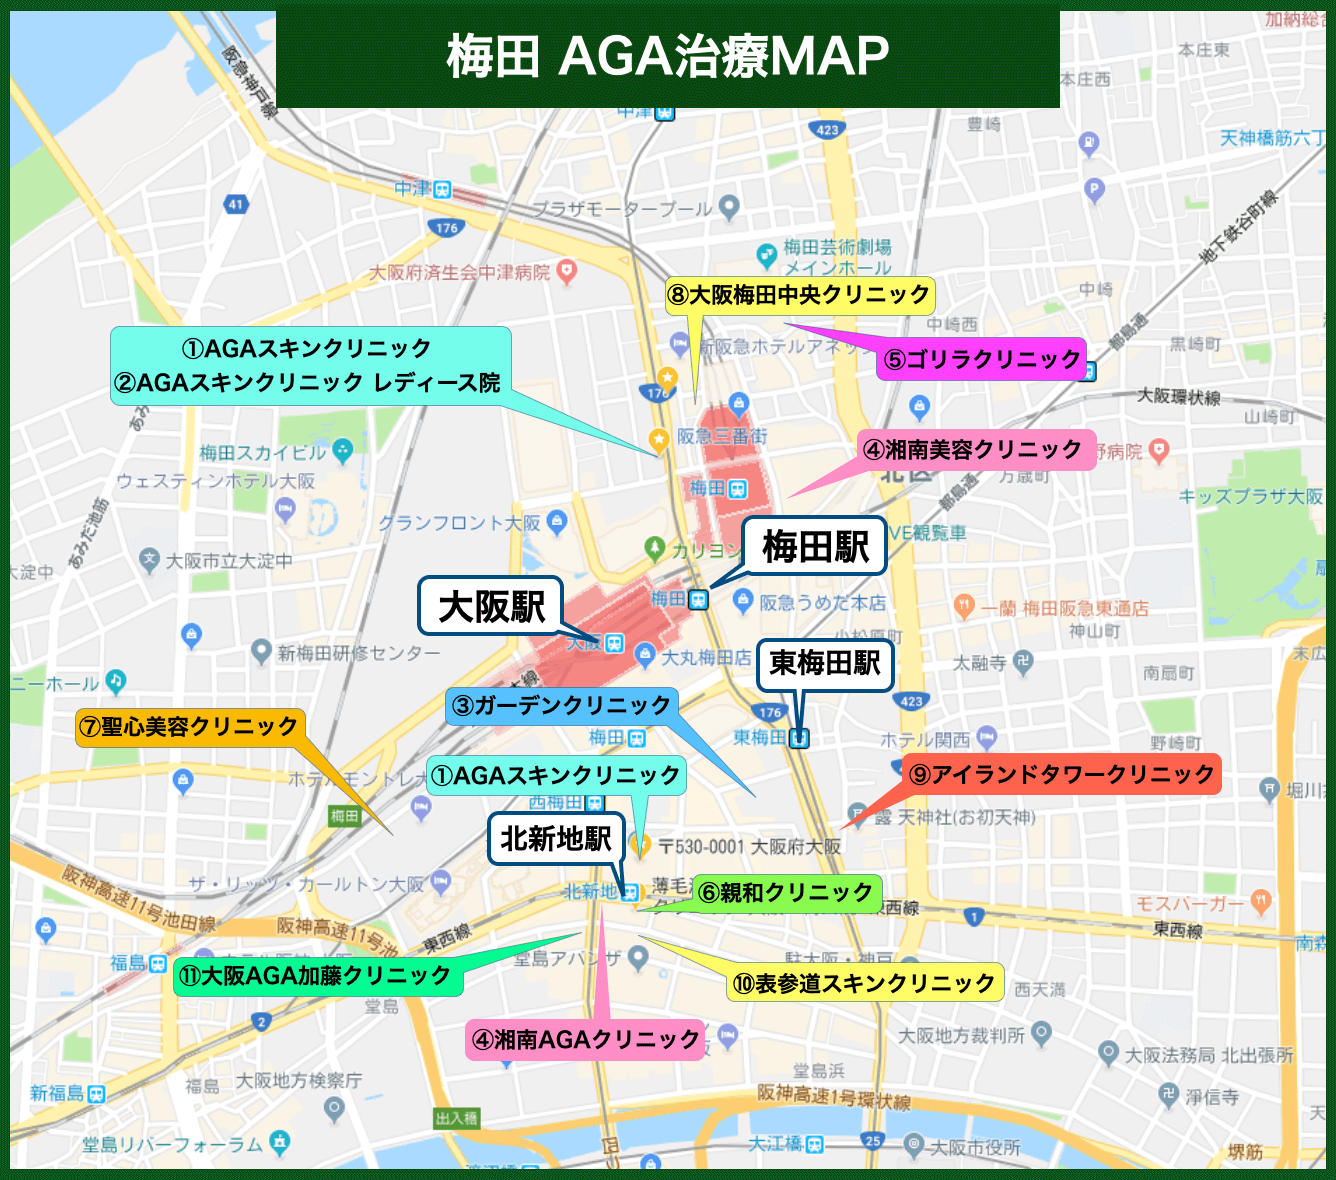 梅田 AGA治療MAP